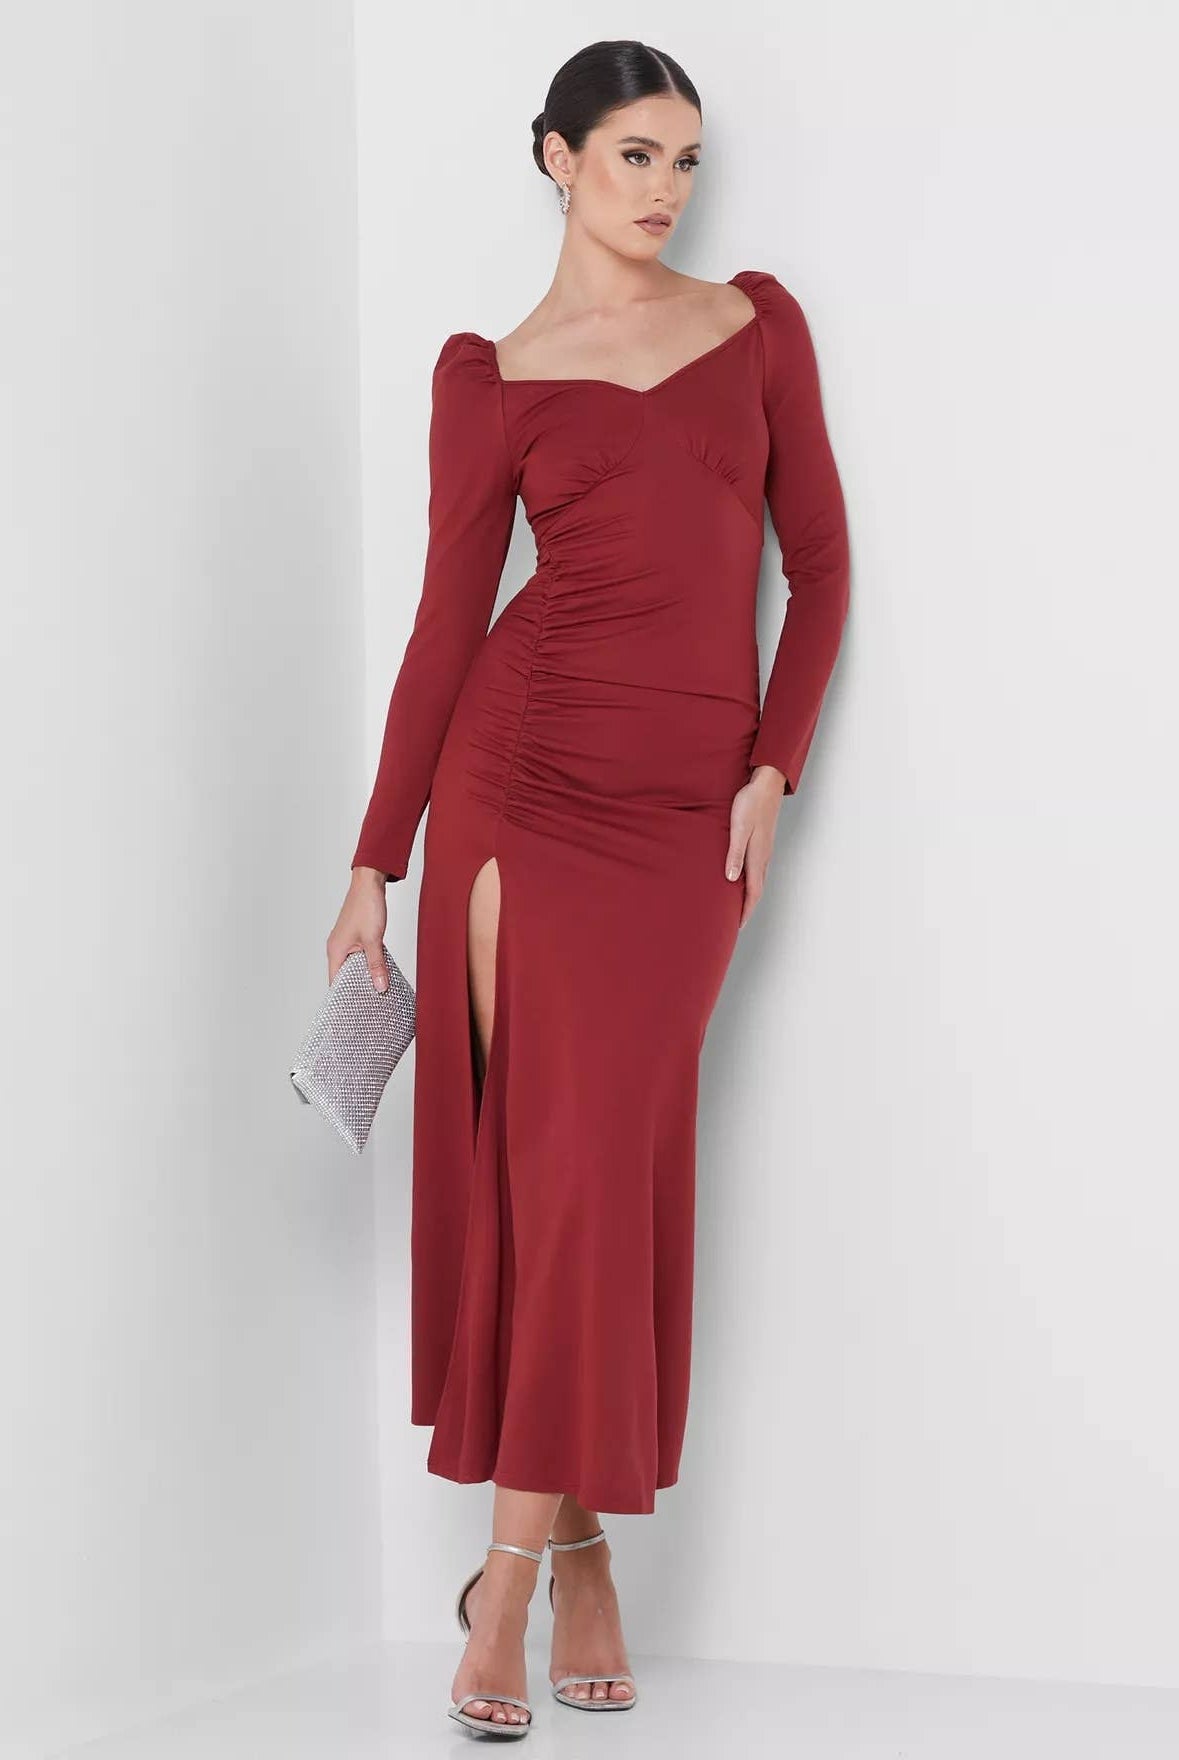 Alluring Puff-Shoulder Wine Red Midi Dress